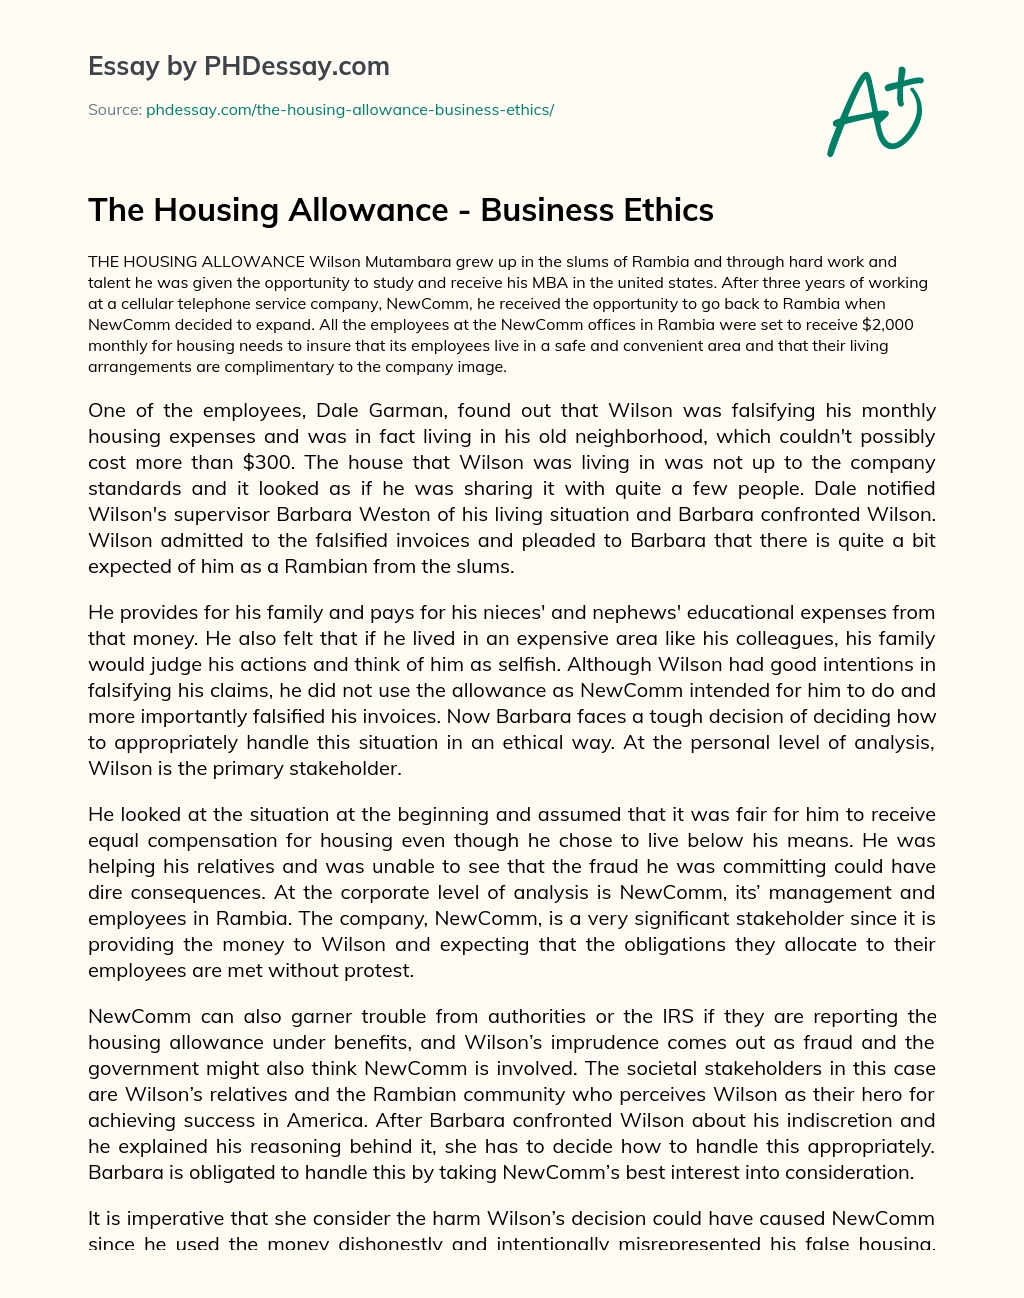 The Housing Allowance – Business Ethics essay